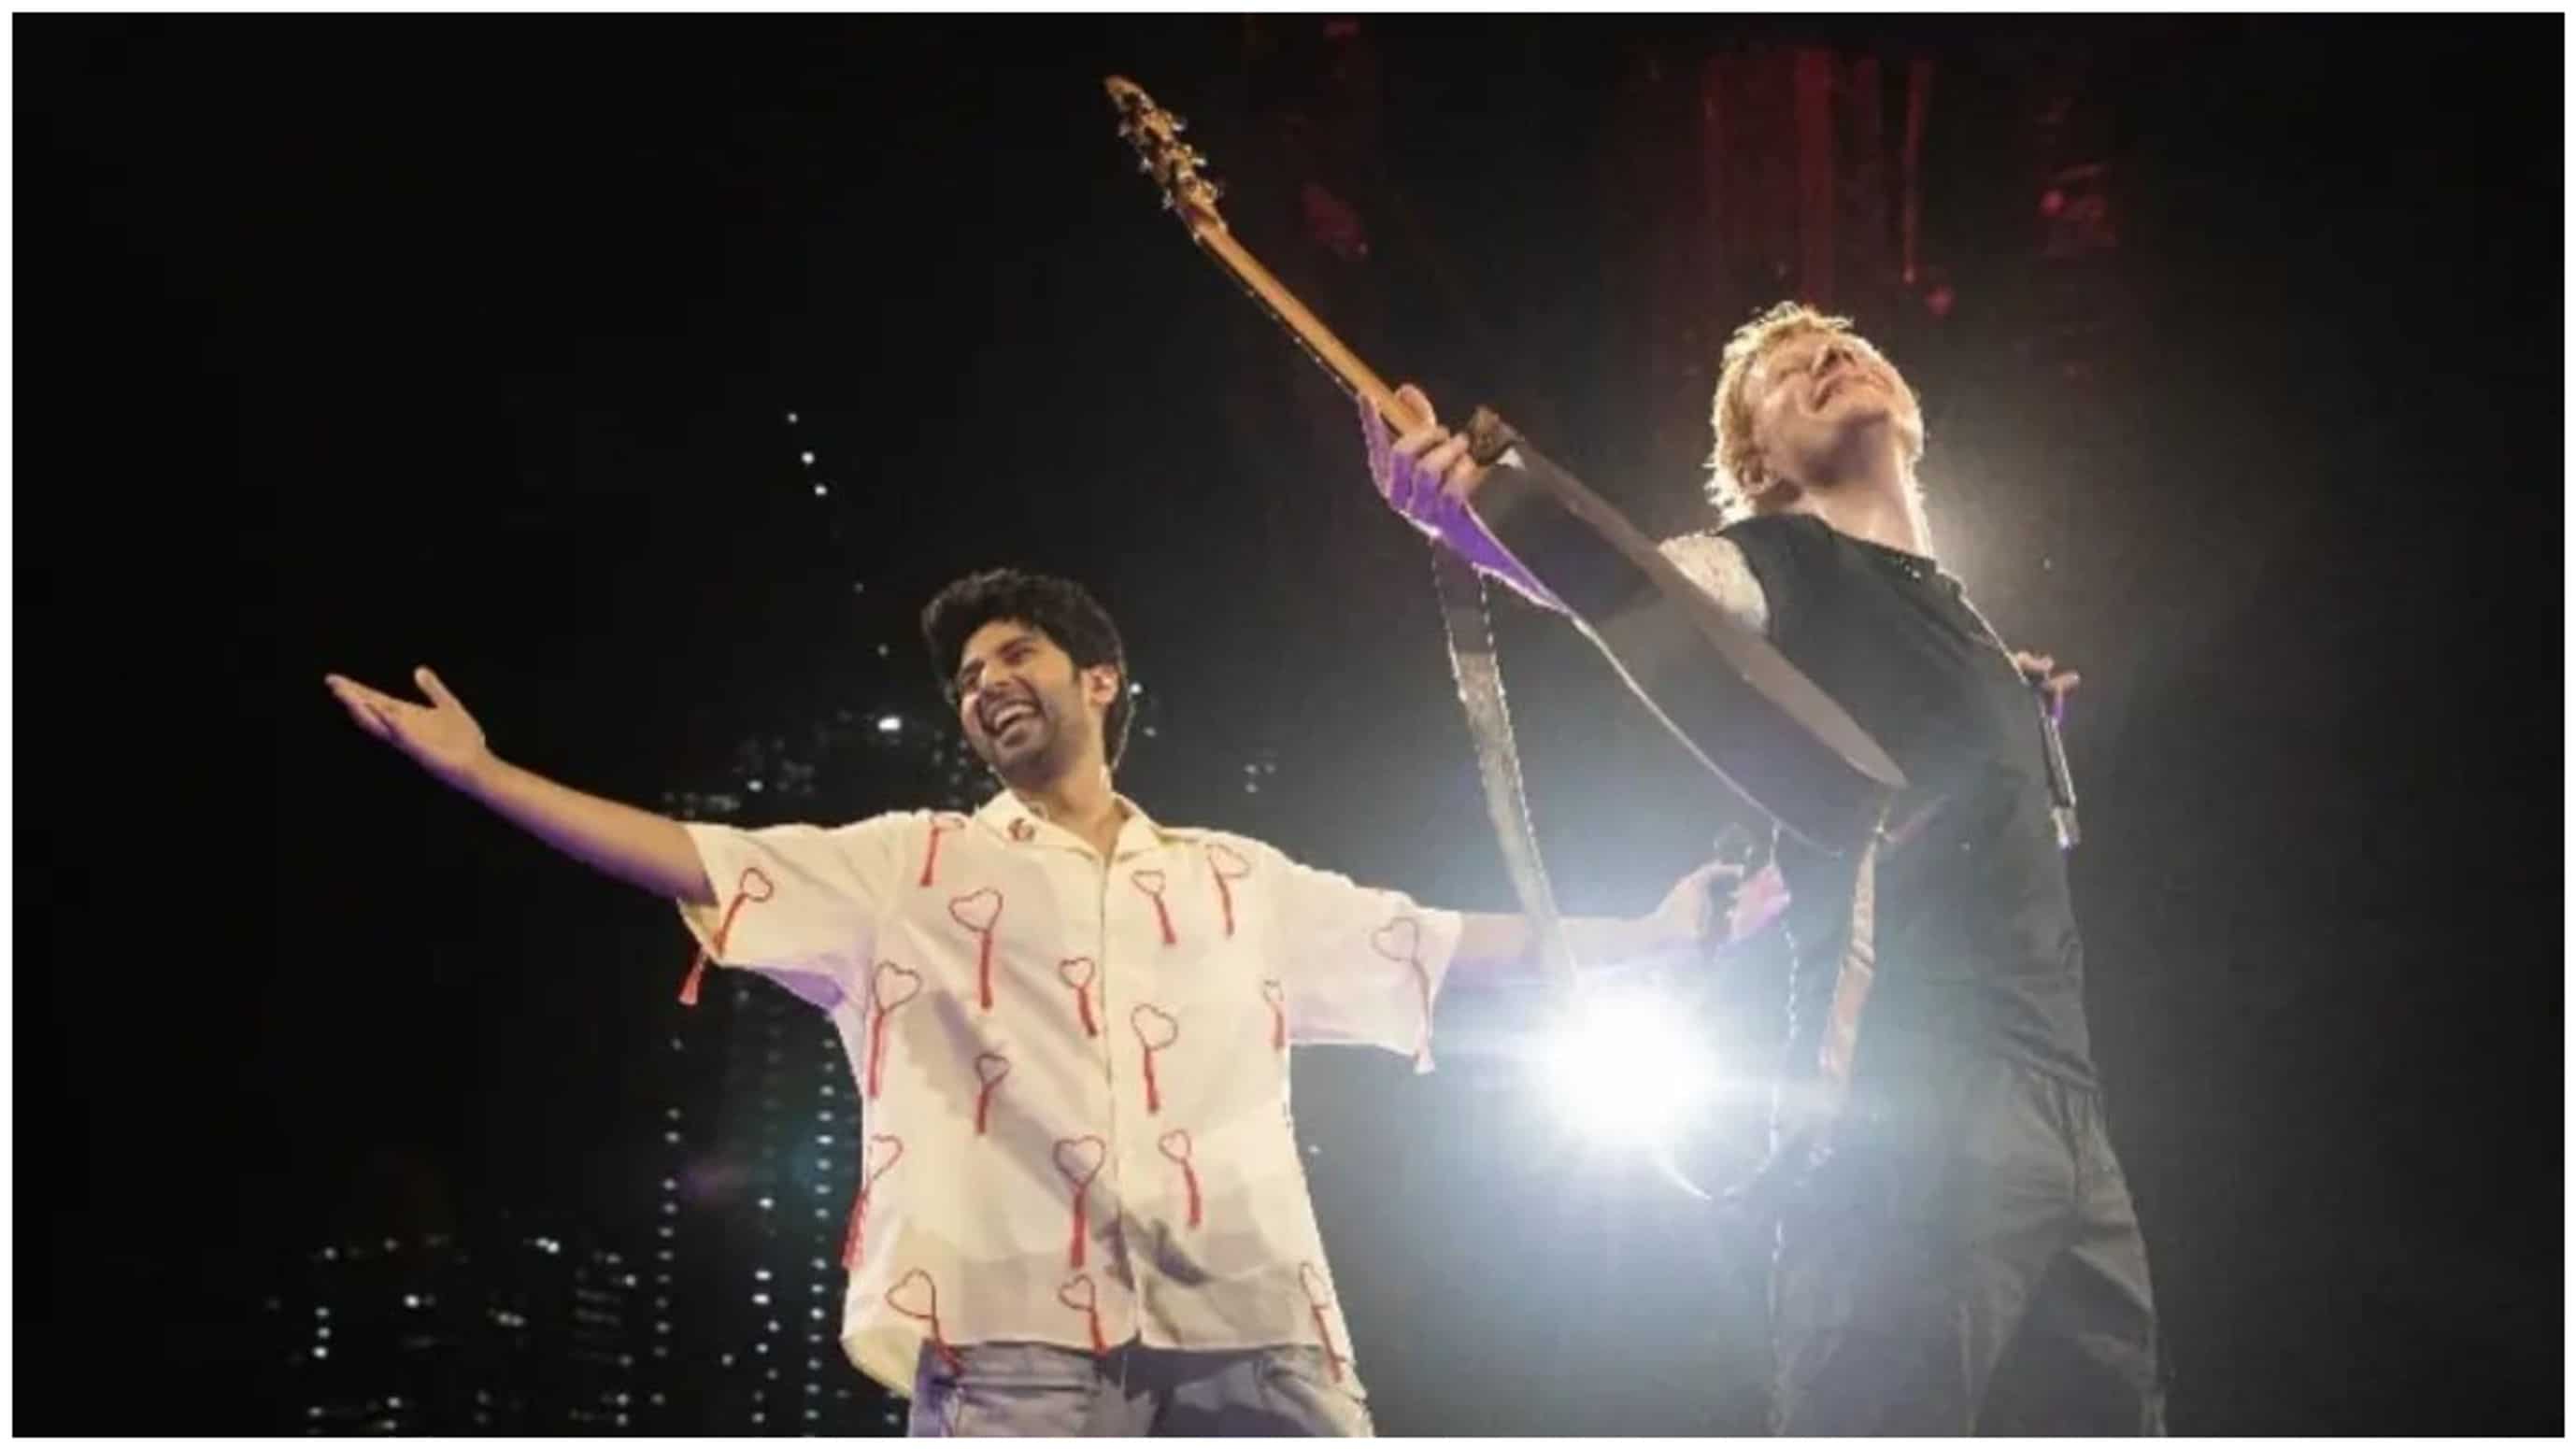 https://www.mobilemasala.com/film-gossip/Ed-Sheeran-Armaan-Malik-strike-Shah-Rukh-Khans-signature-pose-at-Mumbai-concert-together-Watch-i224461